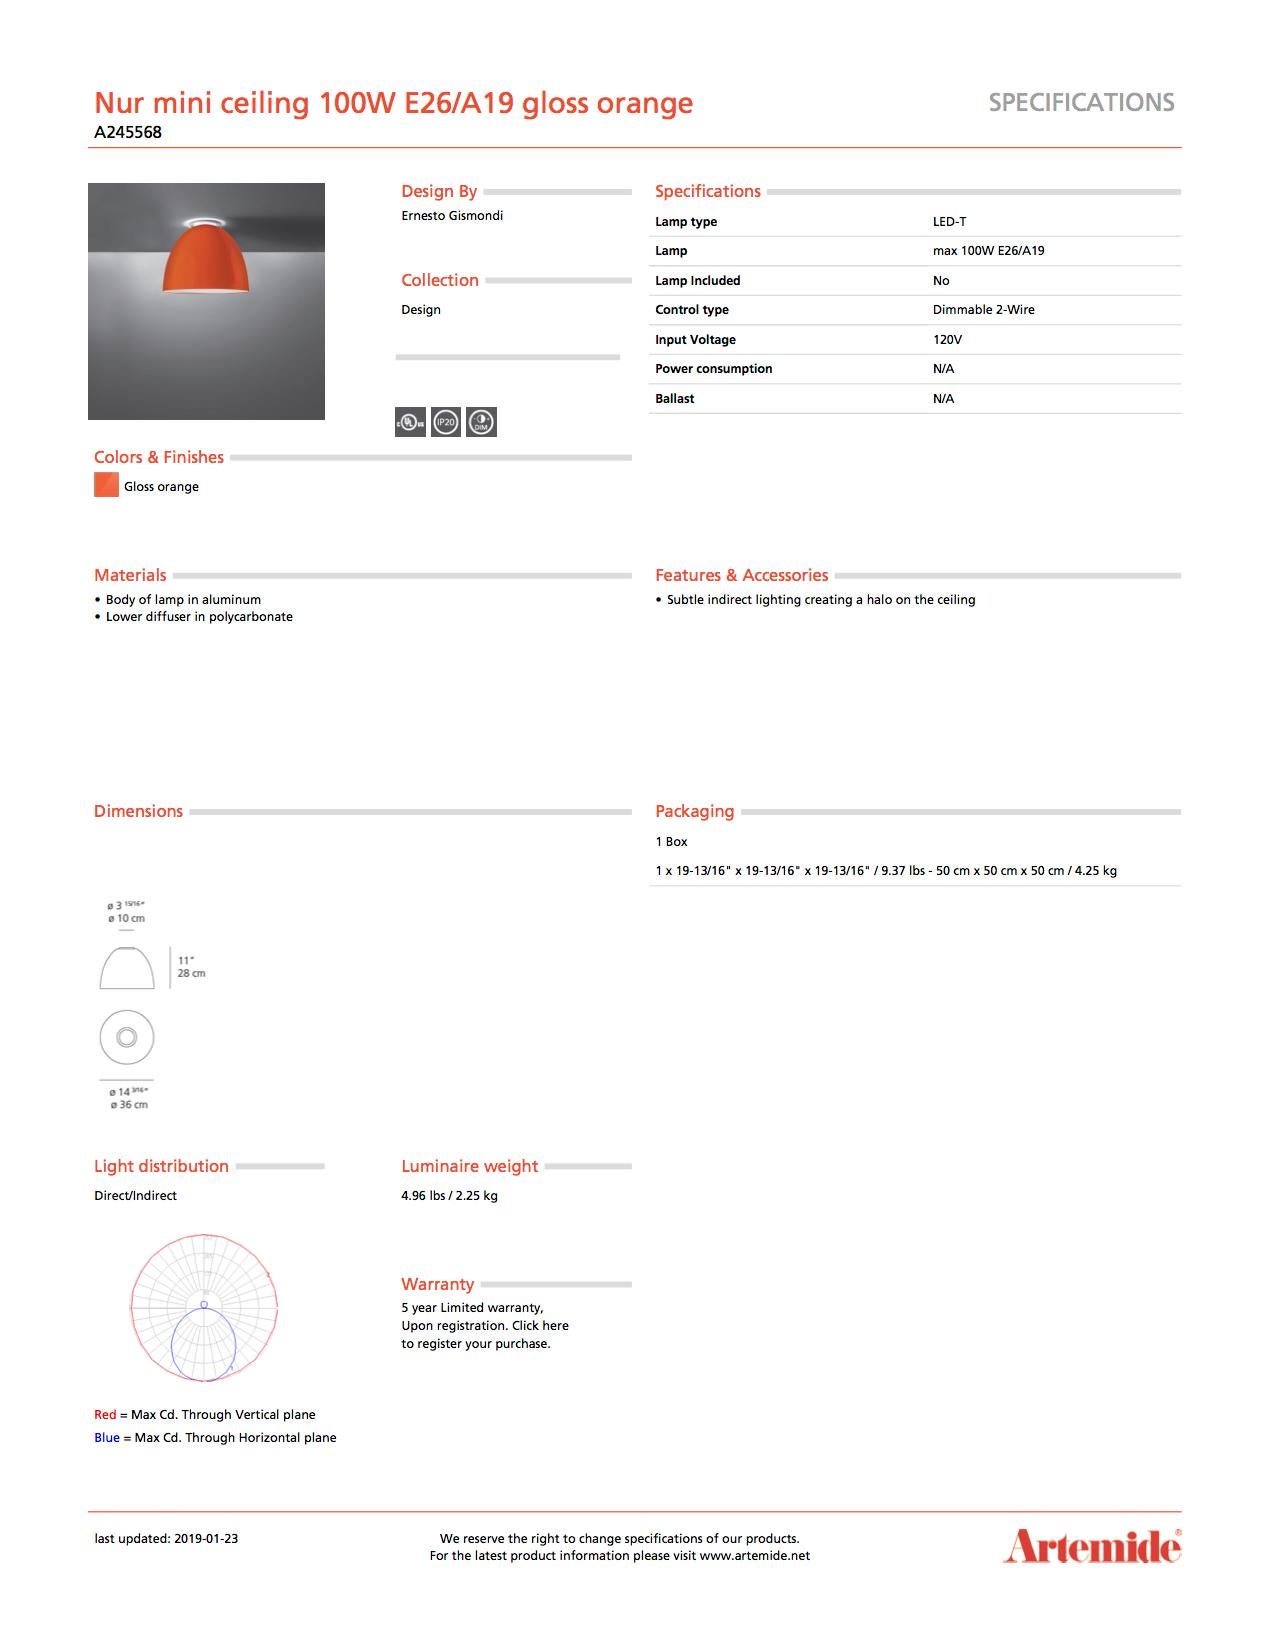 Modern Artemide Nur Mini 100W E26 or A19 Ceiling Light in Glossy Orange For Sale